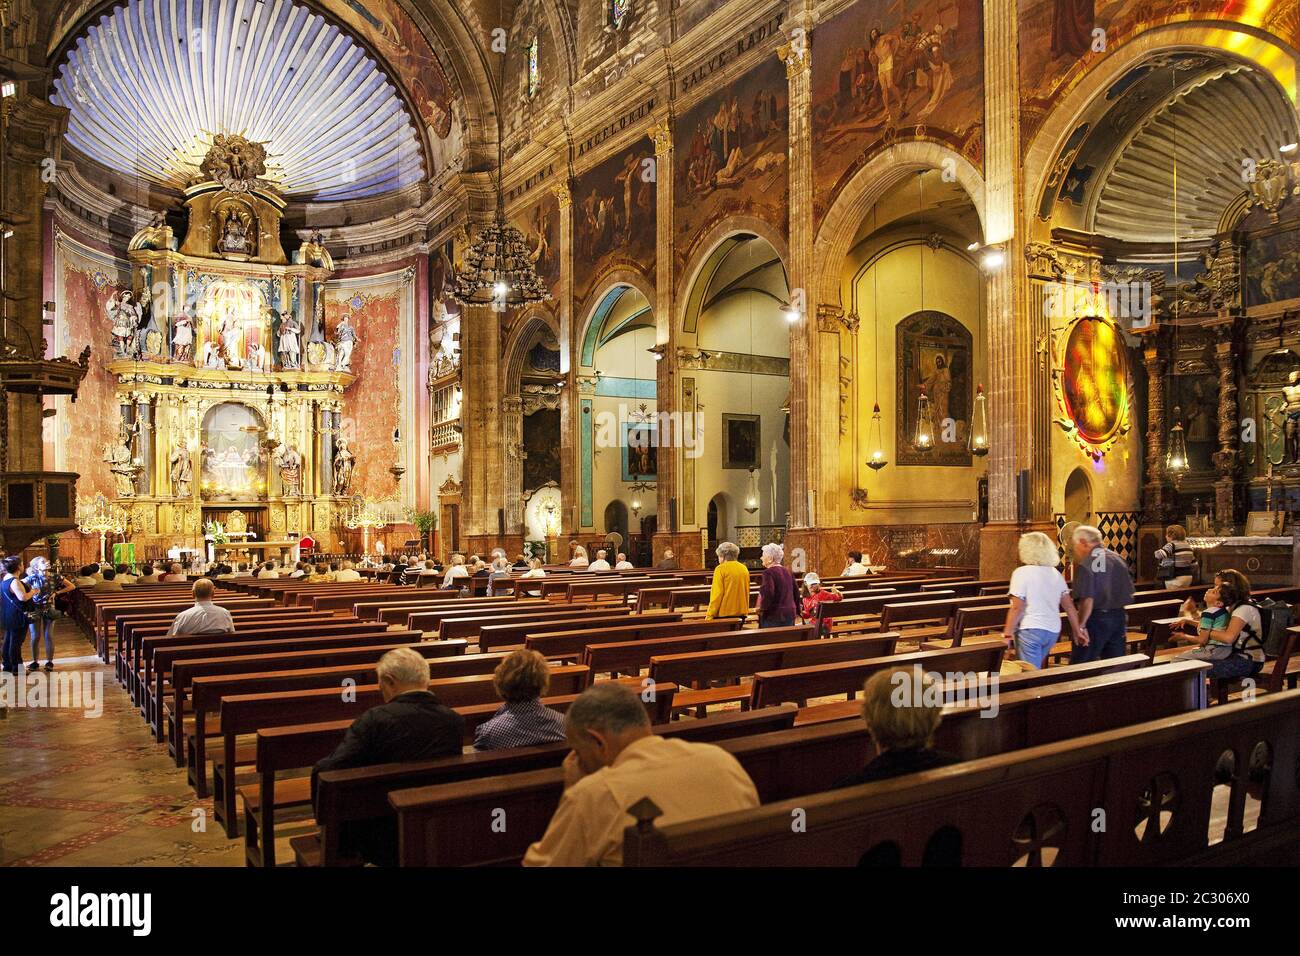 Inside view of the Roman Catholic Church of Santa Maria dels Àngels, Pollenca, Majorca, Spain Stock Photo